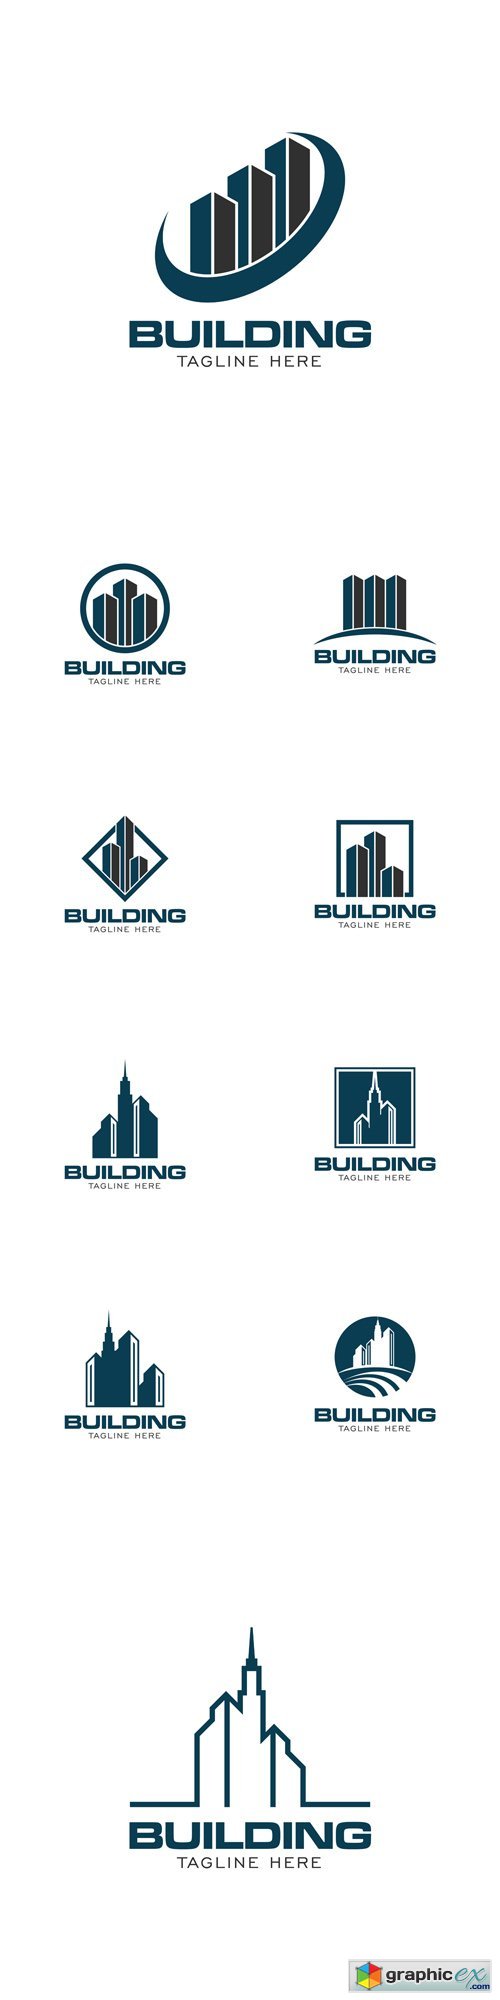 Building Concept Logo Design Template